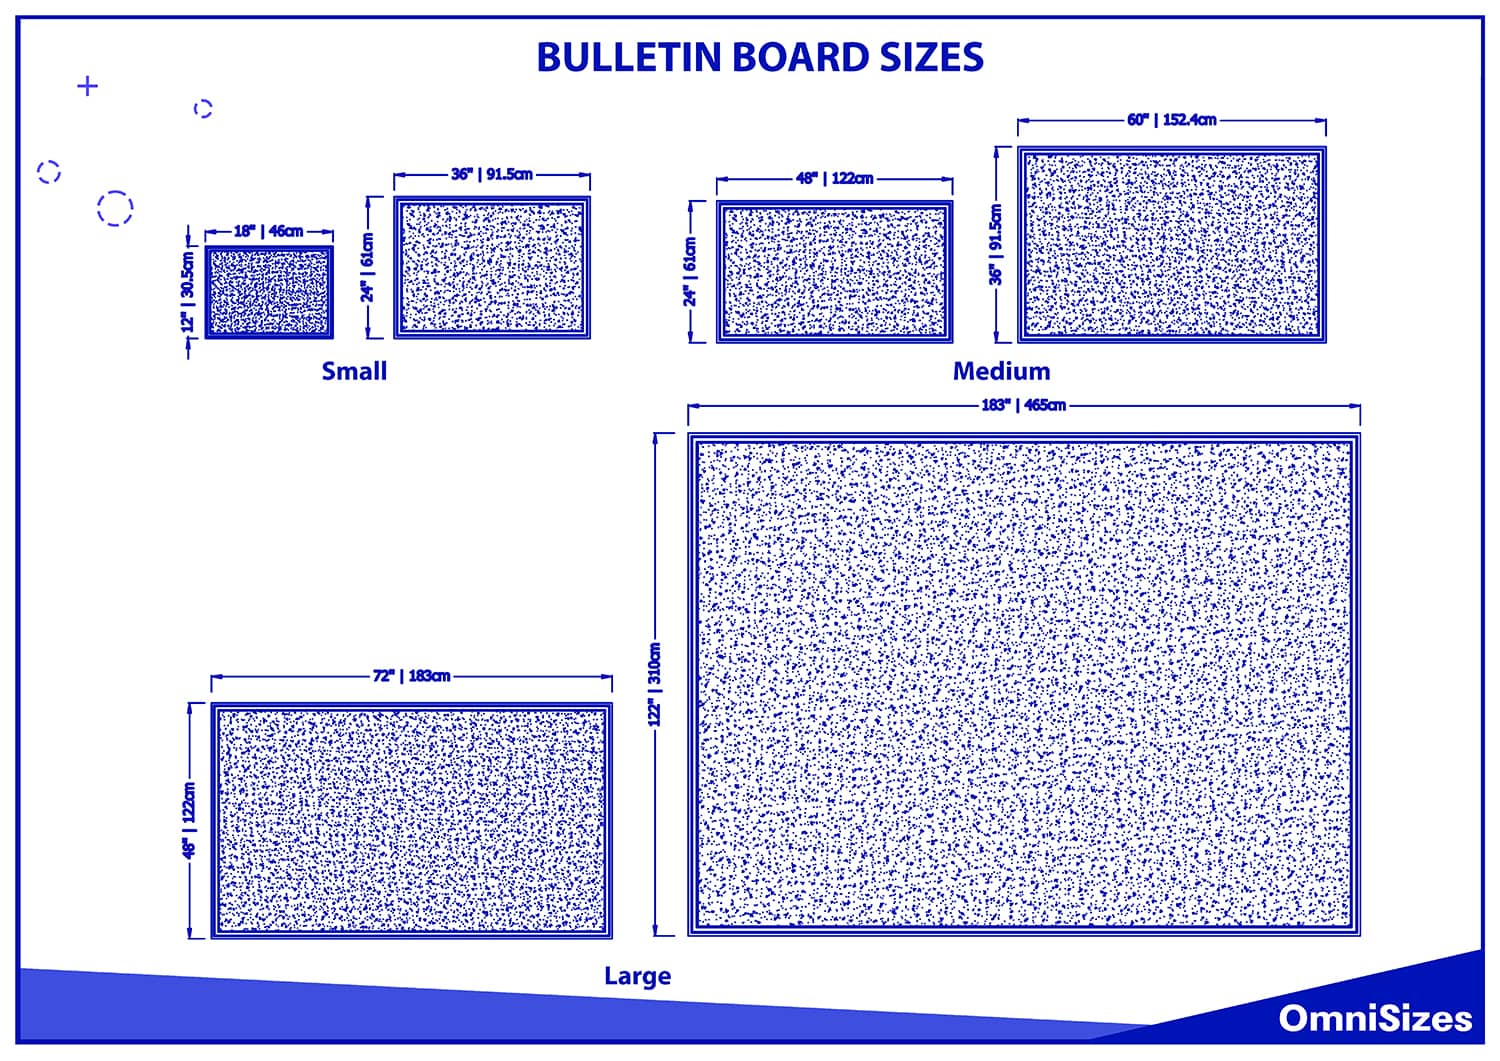 Bulletin board sizes